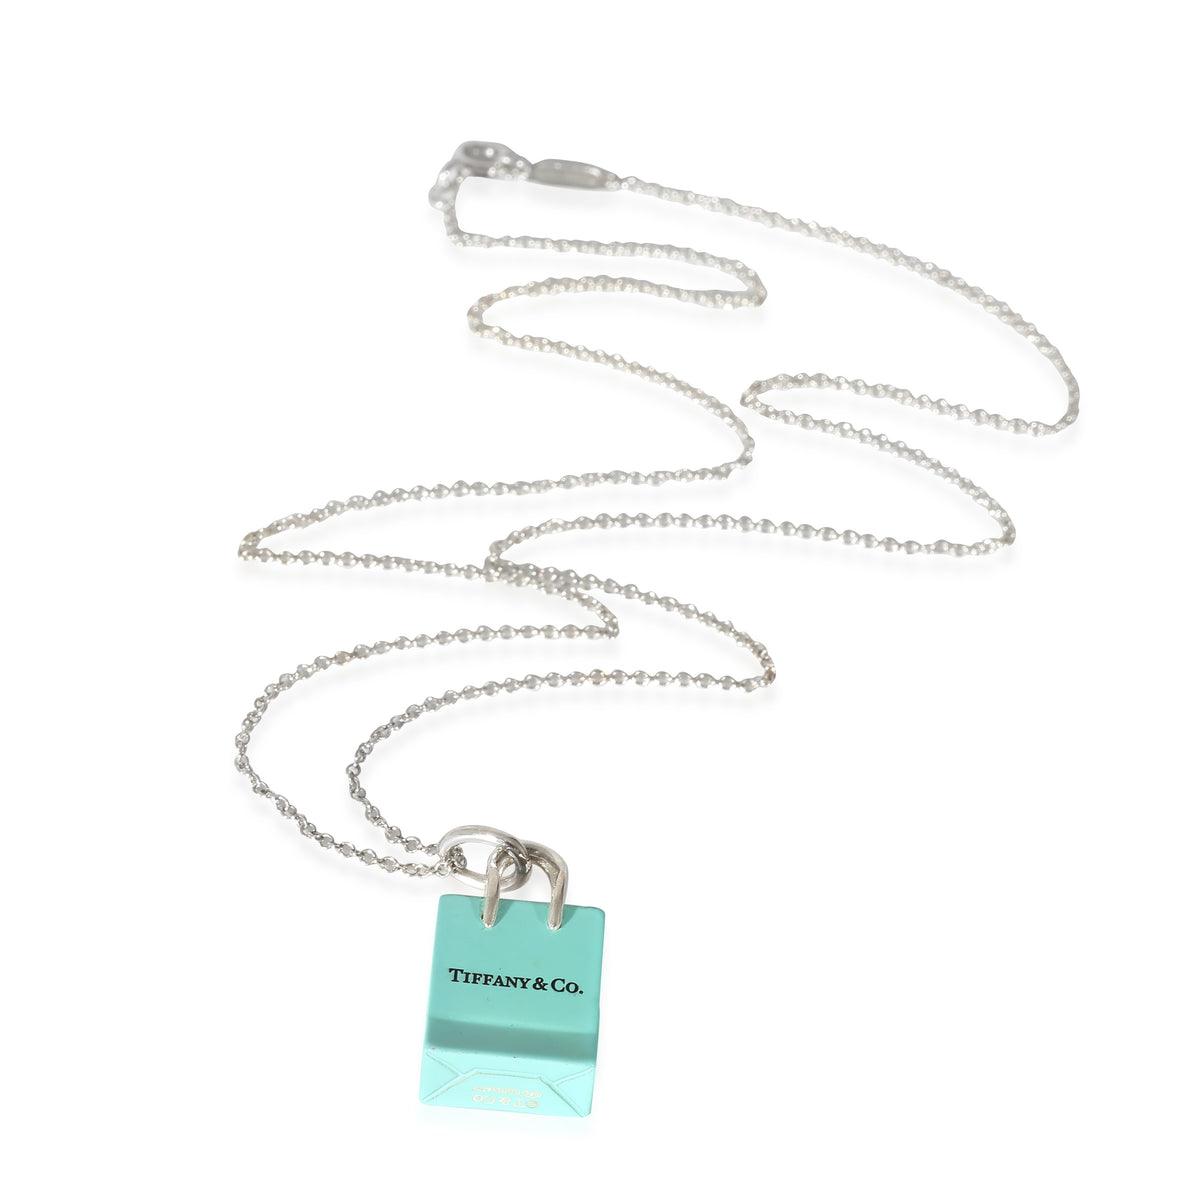 Tiffany & Co Enamel Shopping Bag Charm Pendant